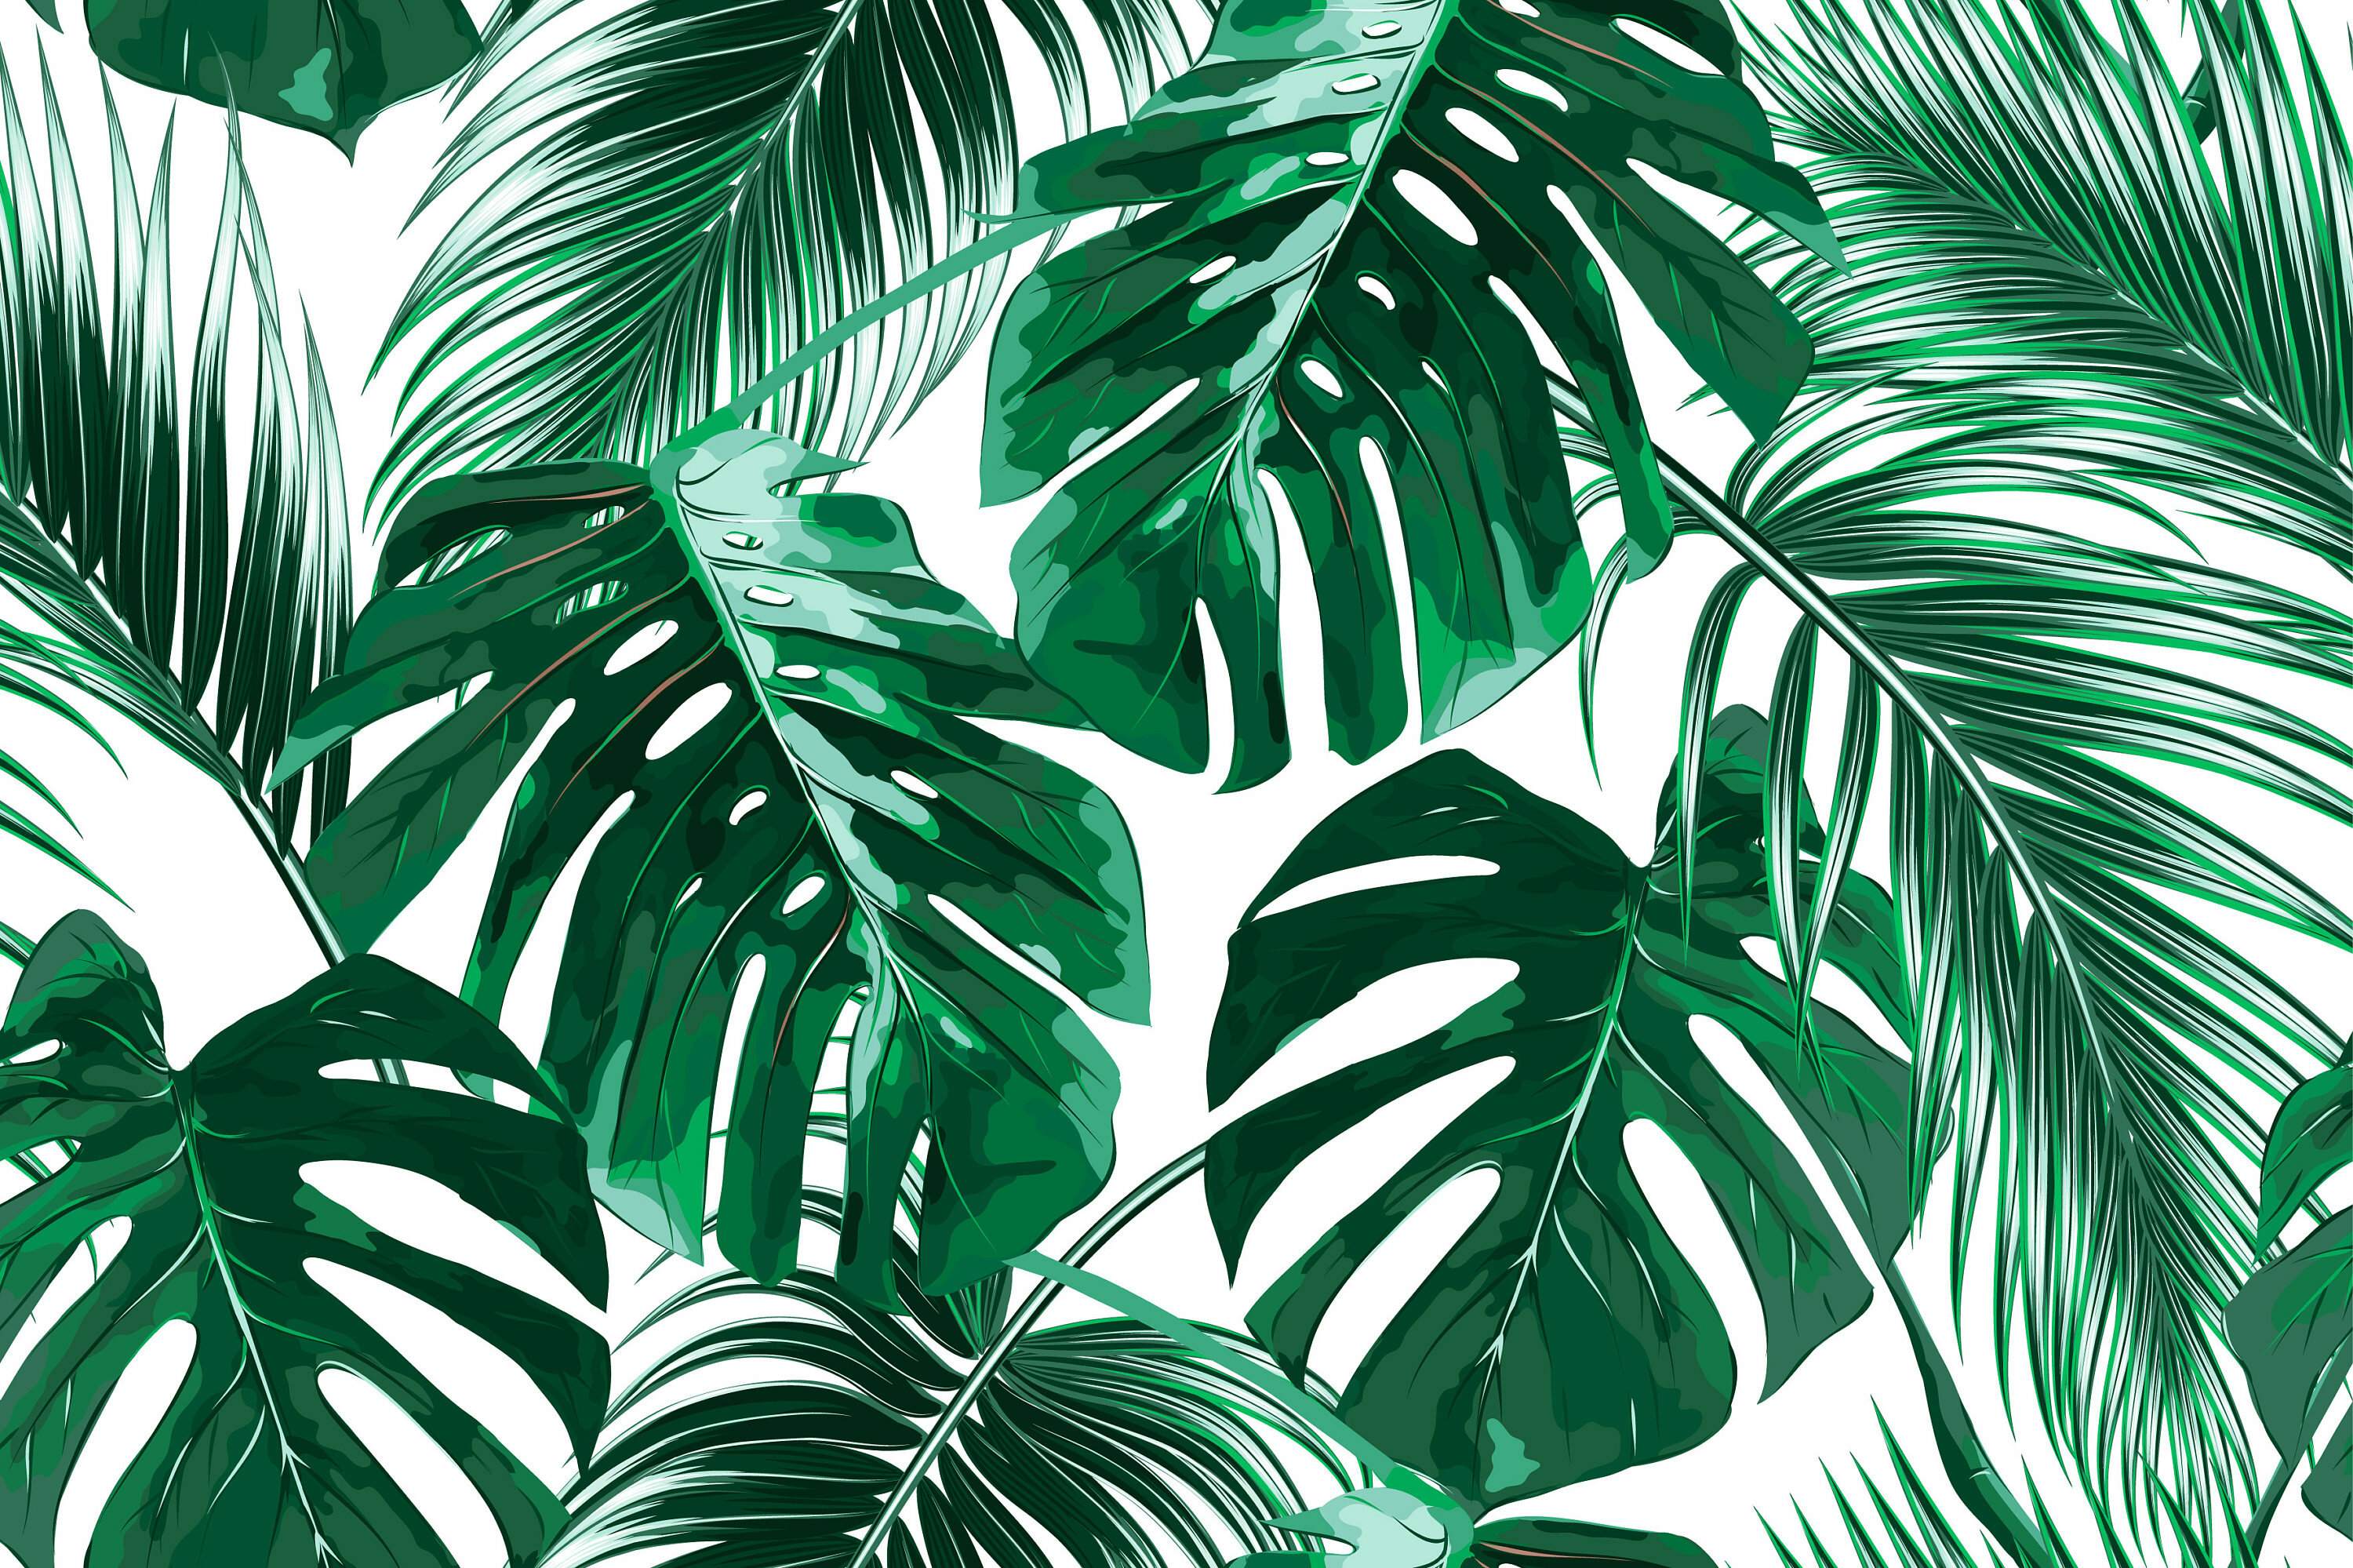 Joana Removable Tropical Palm Leaves 7.92' L x 150